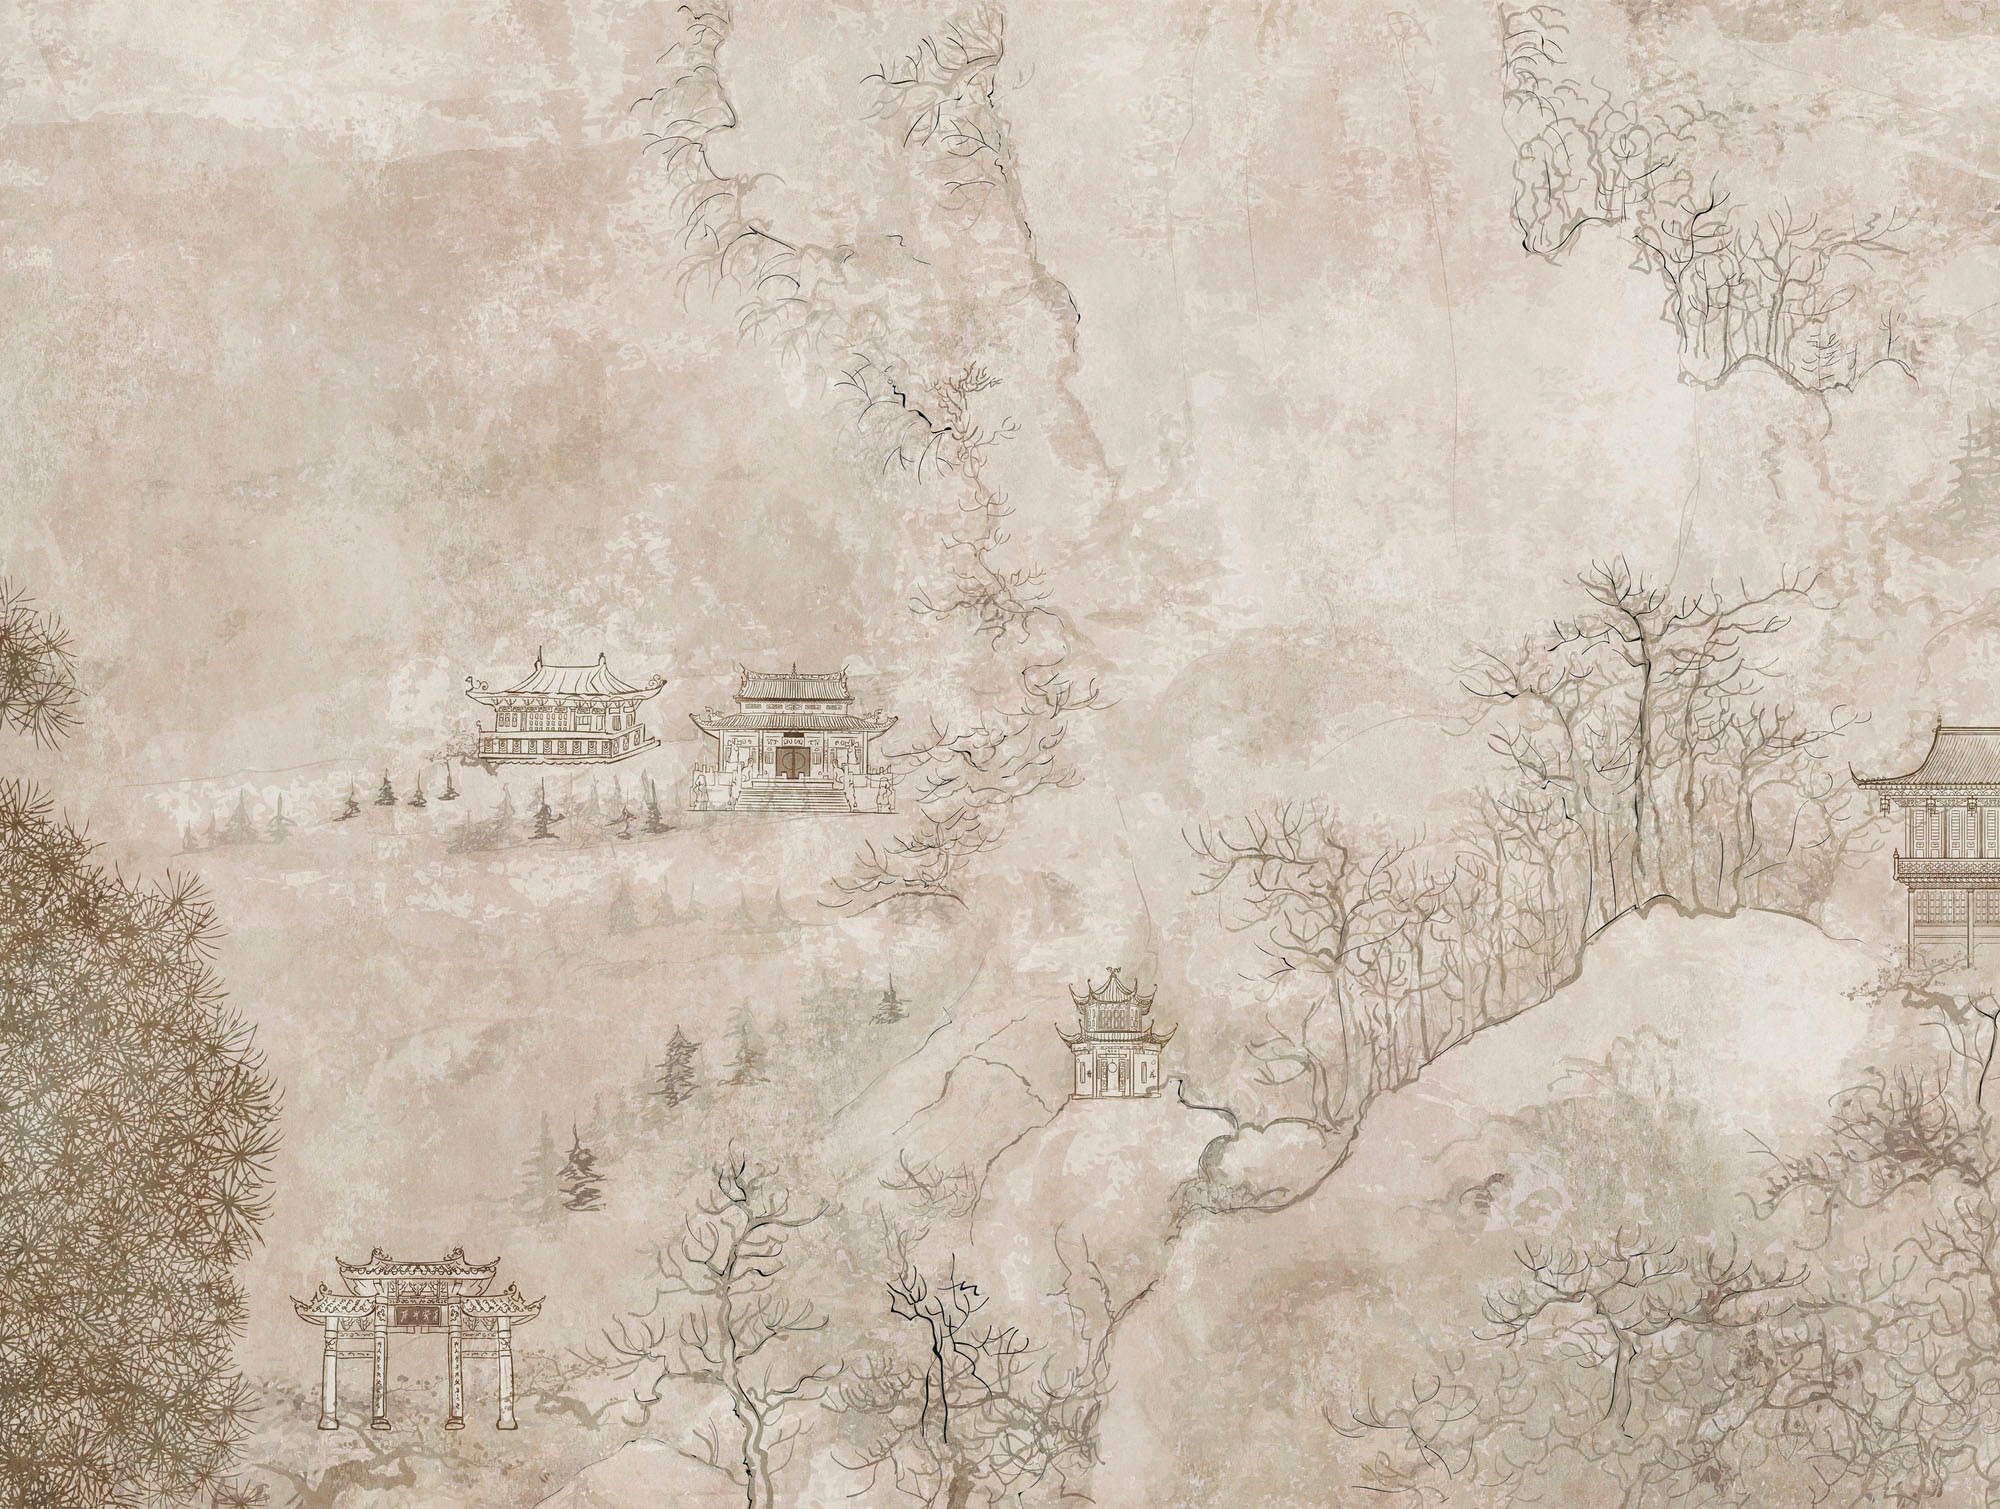 Fototapete »The Wall«, asiatisch-Motiv-matt, Fototapete Chinesisch Tapete Japanisch Beige